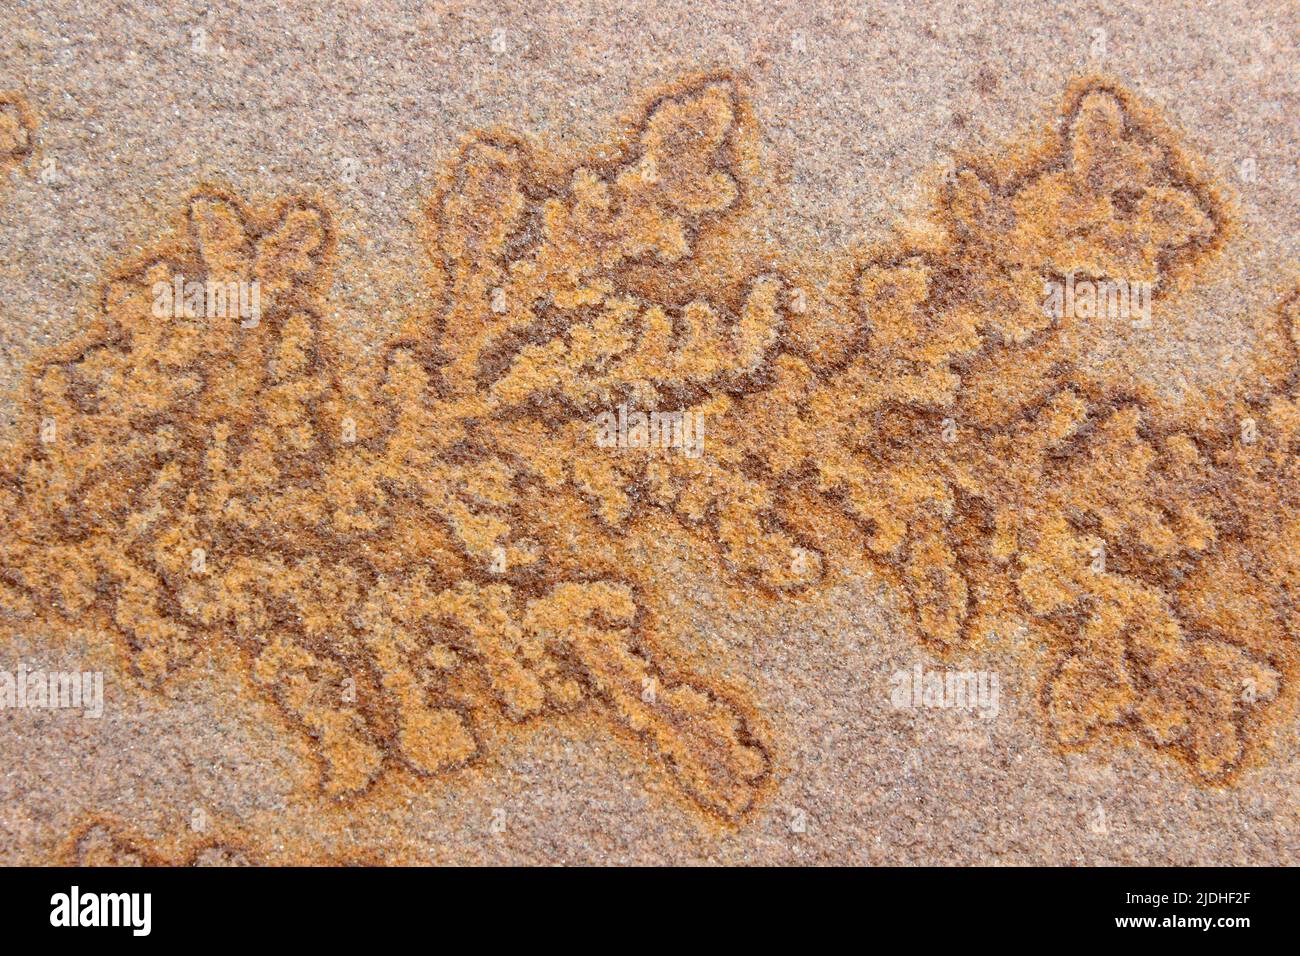 Dendritic Pattern In Sandstone Stock Photo